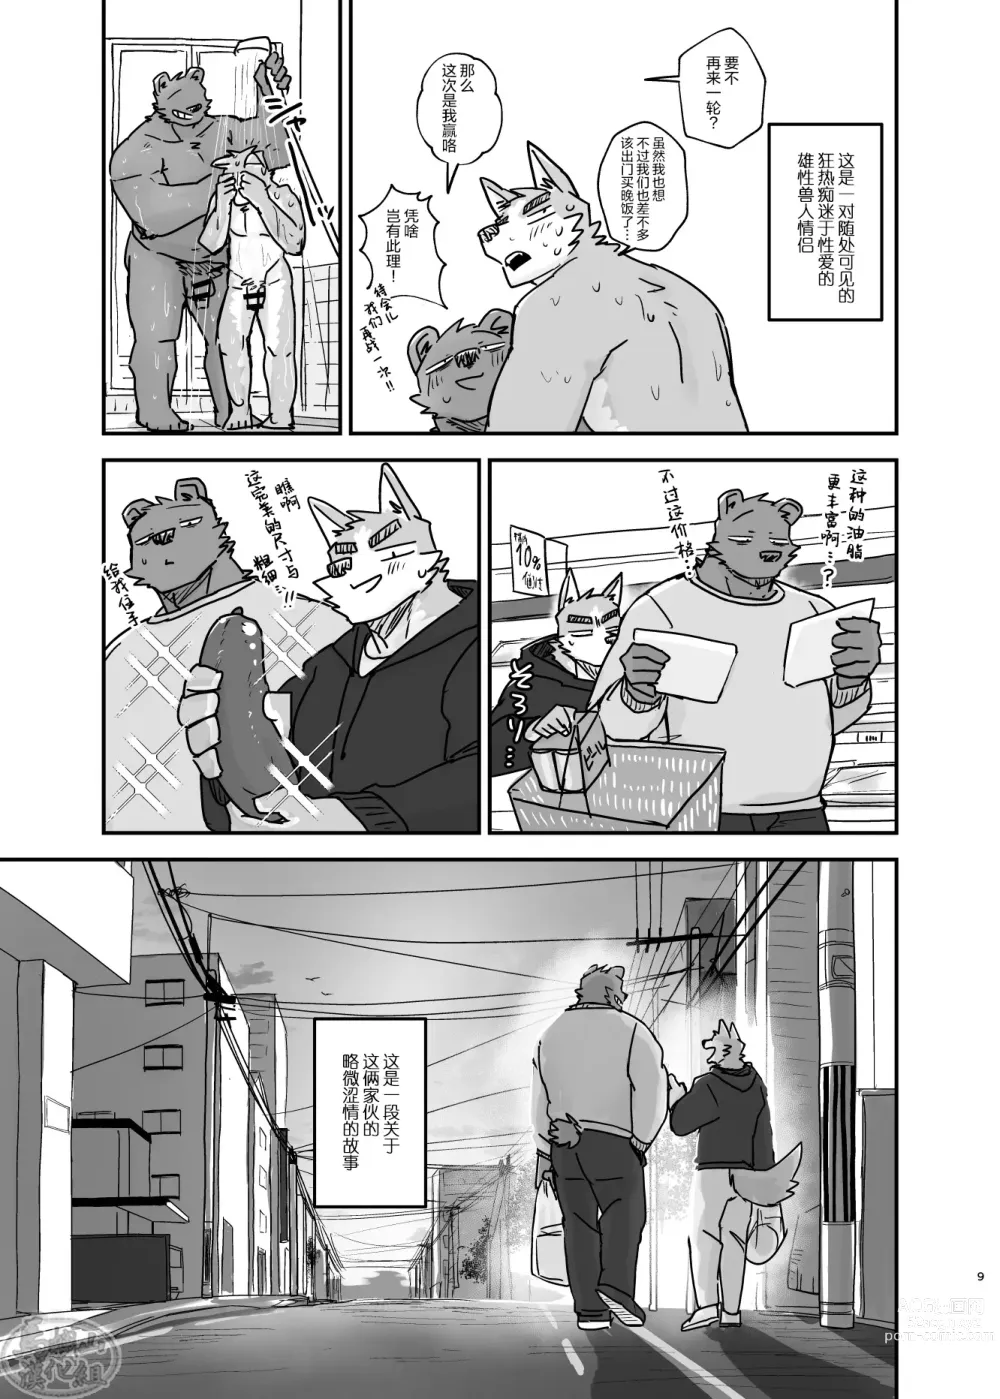 Page 9 of doujinshi 梦乡时分的情事